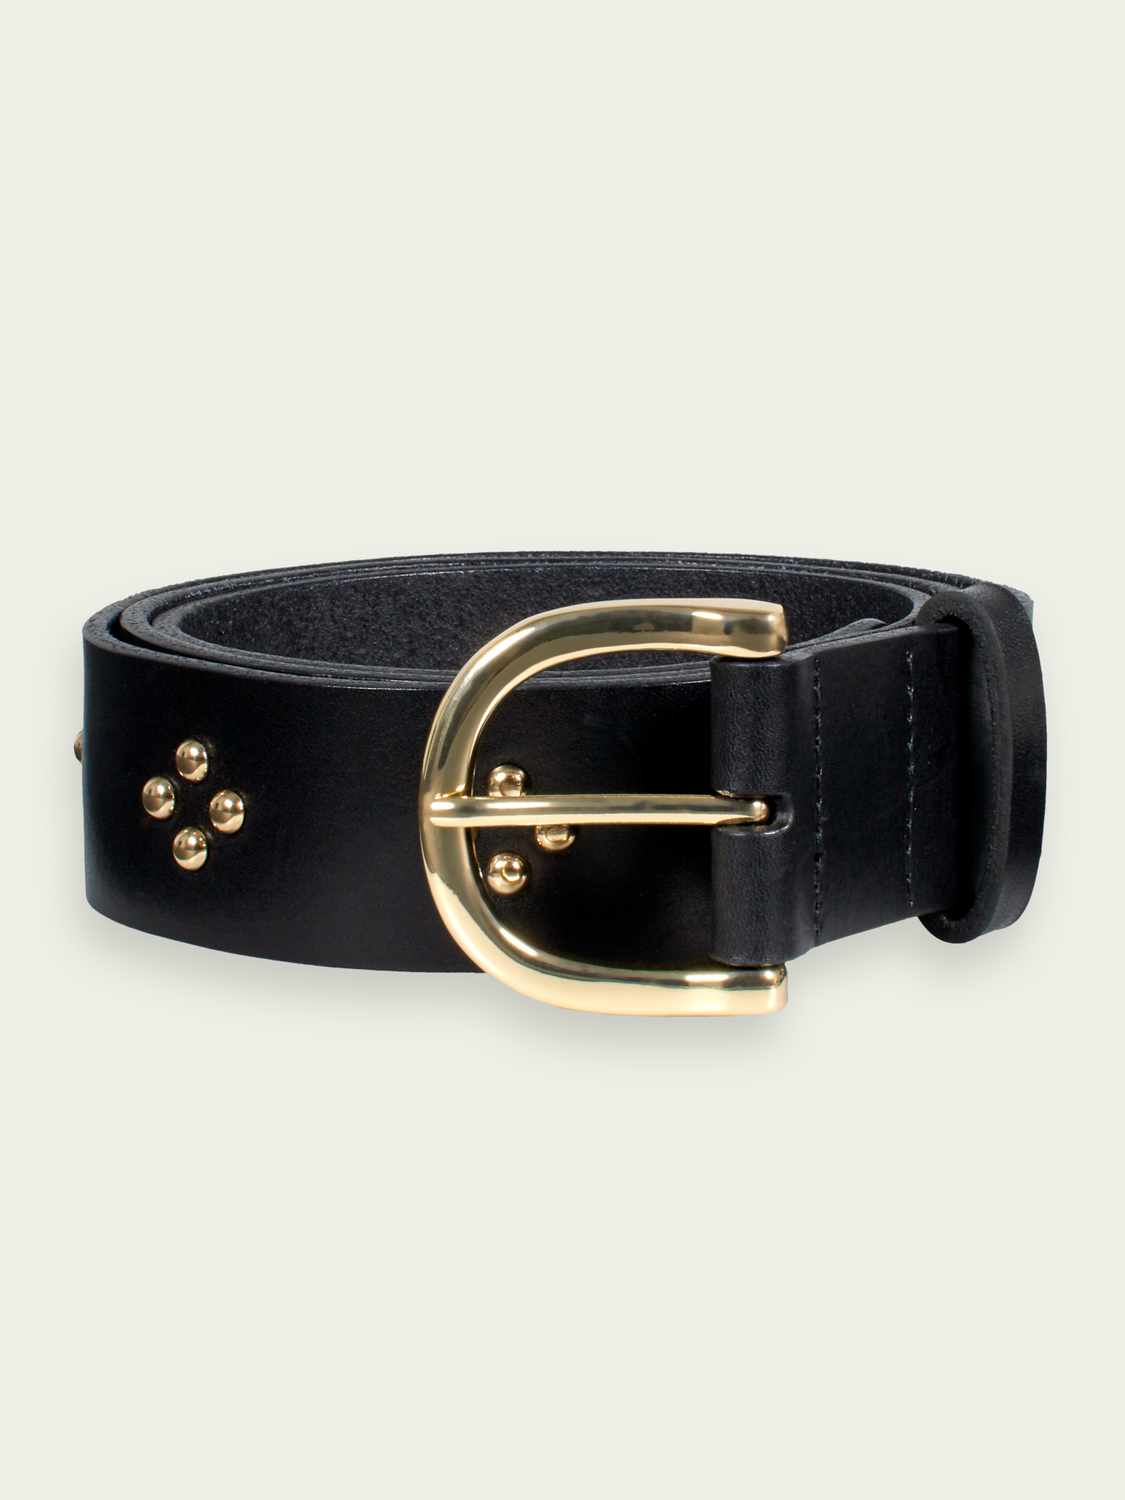 Studded Leather Belt in Black